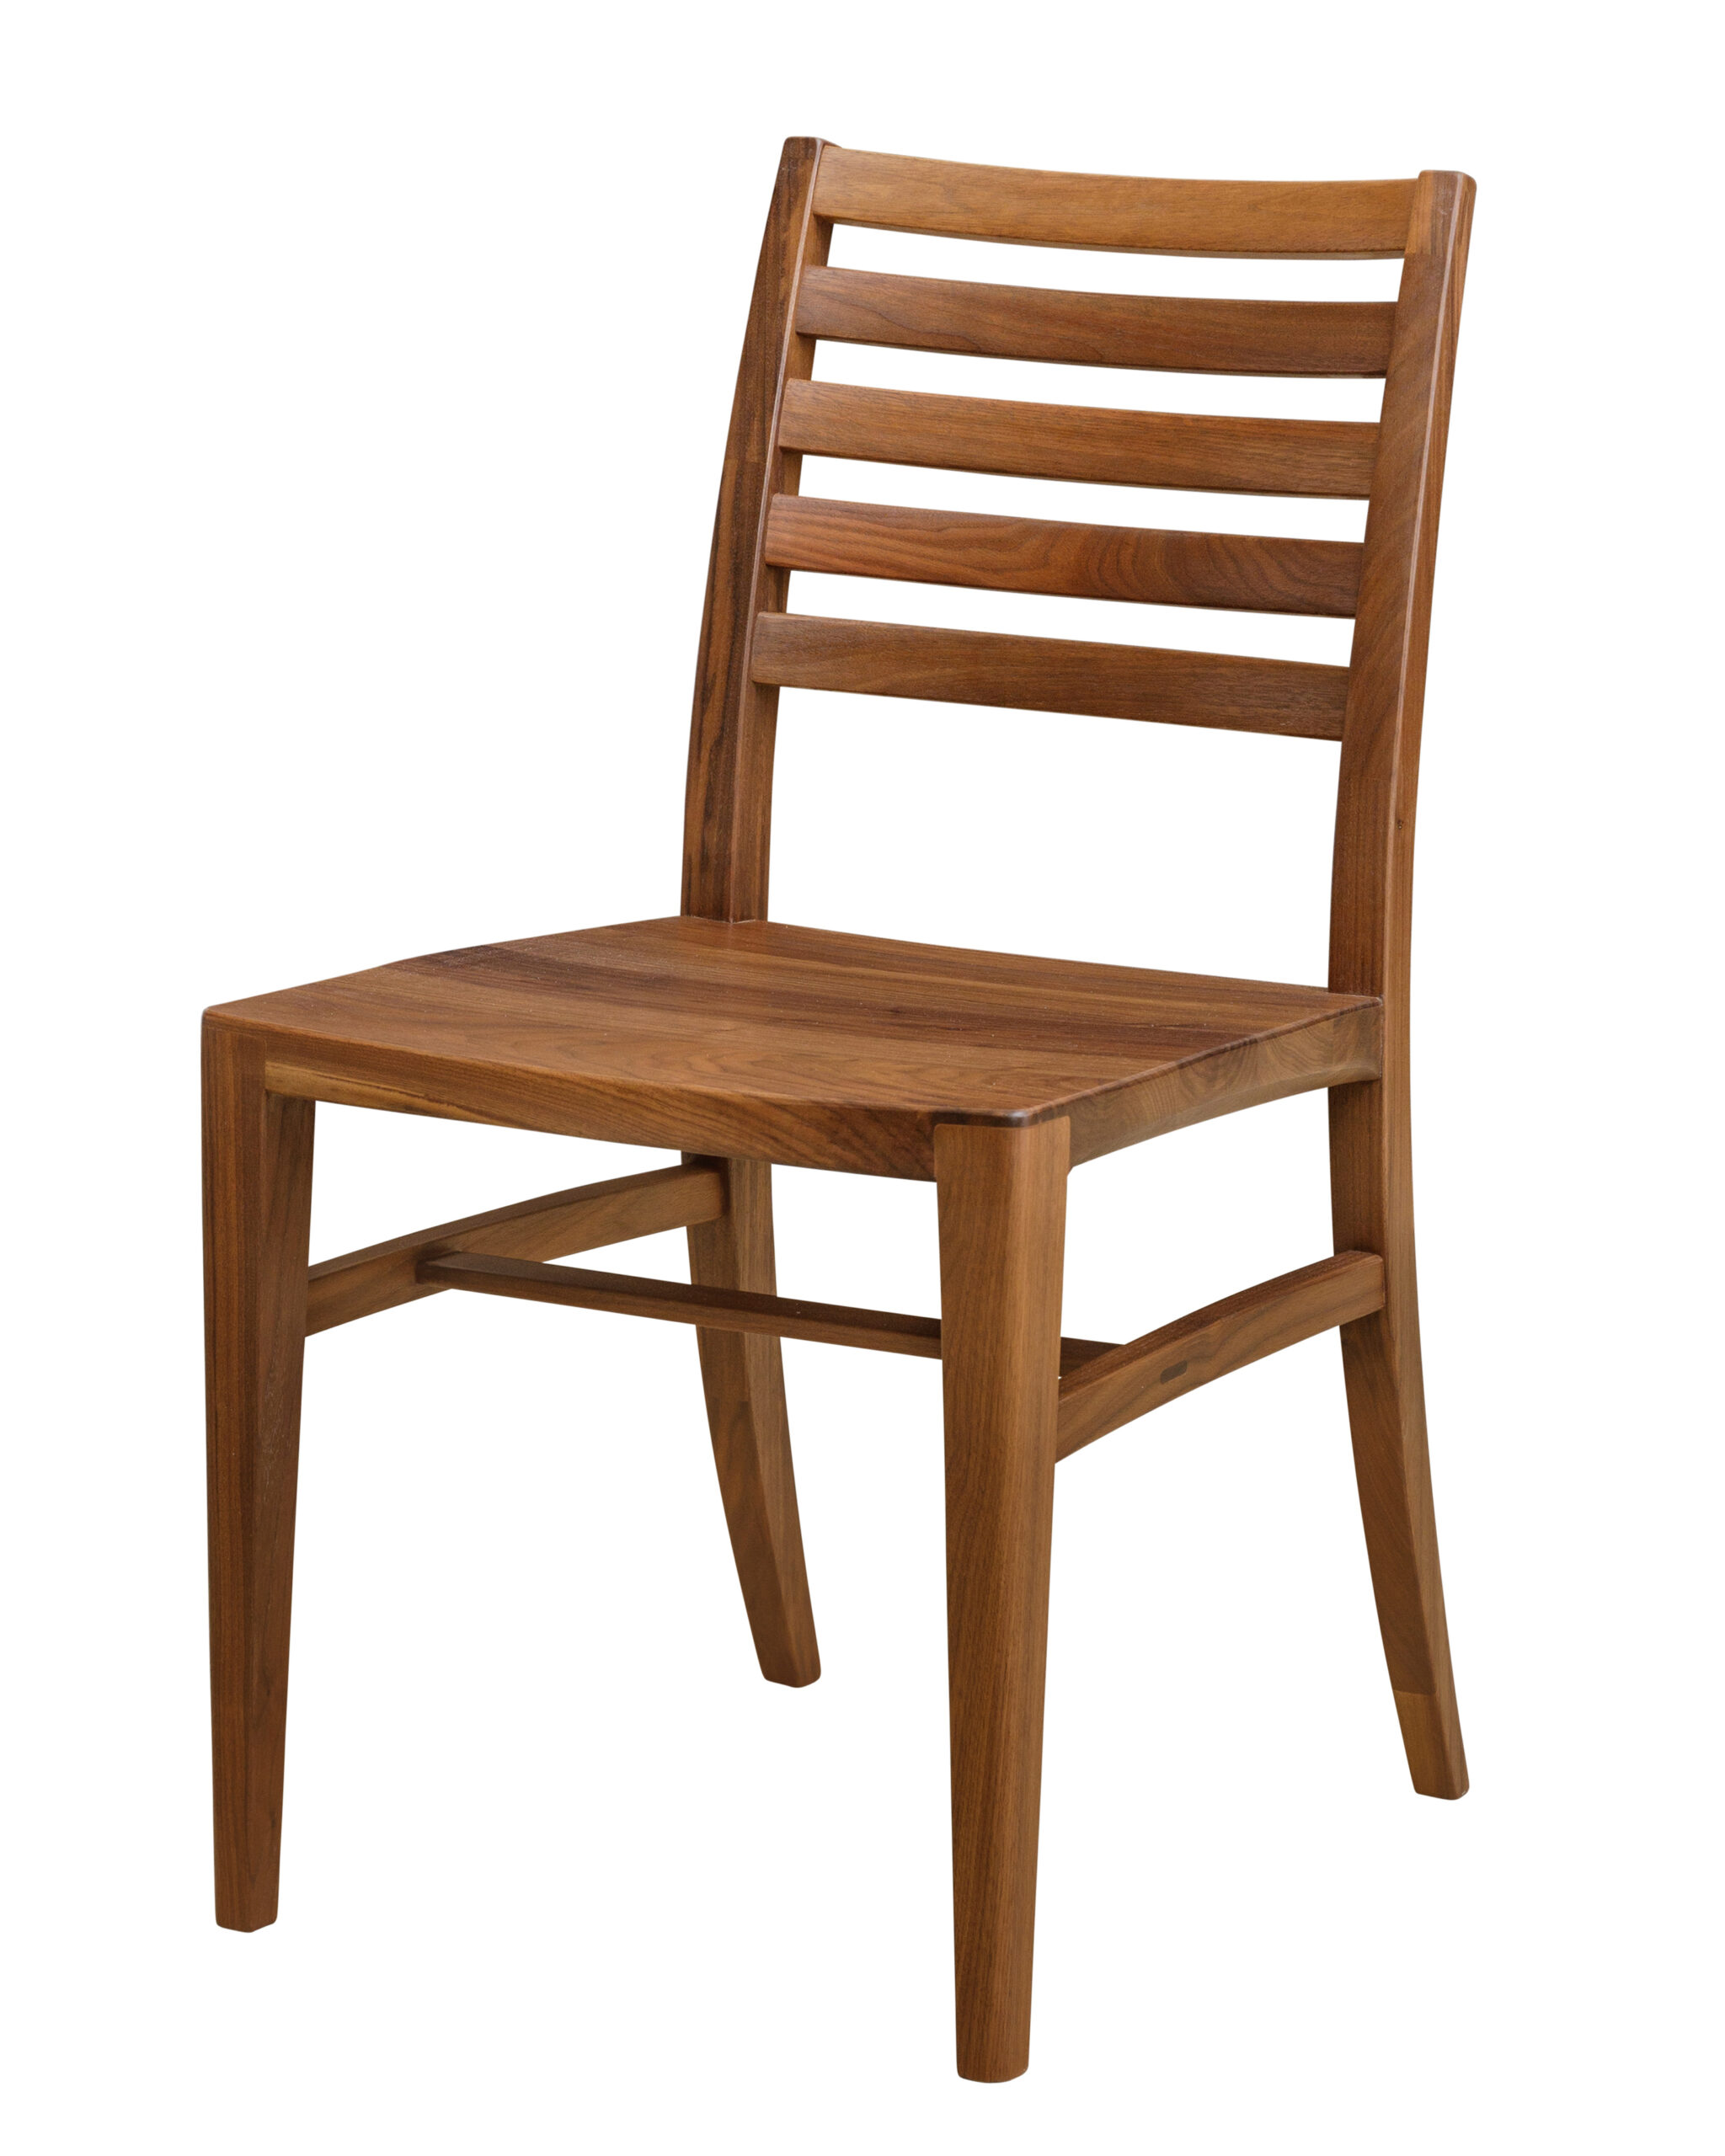 Designer Brentwood Chair Image